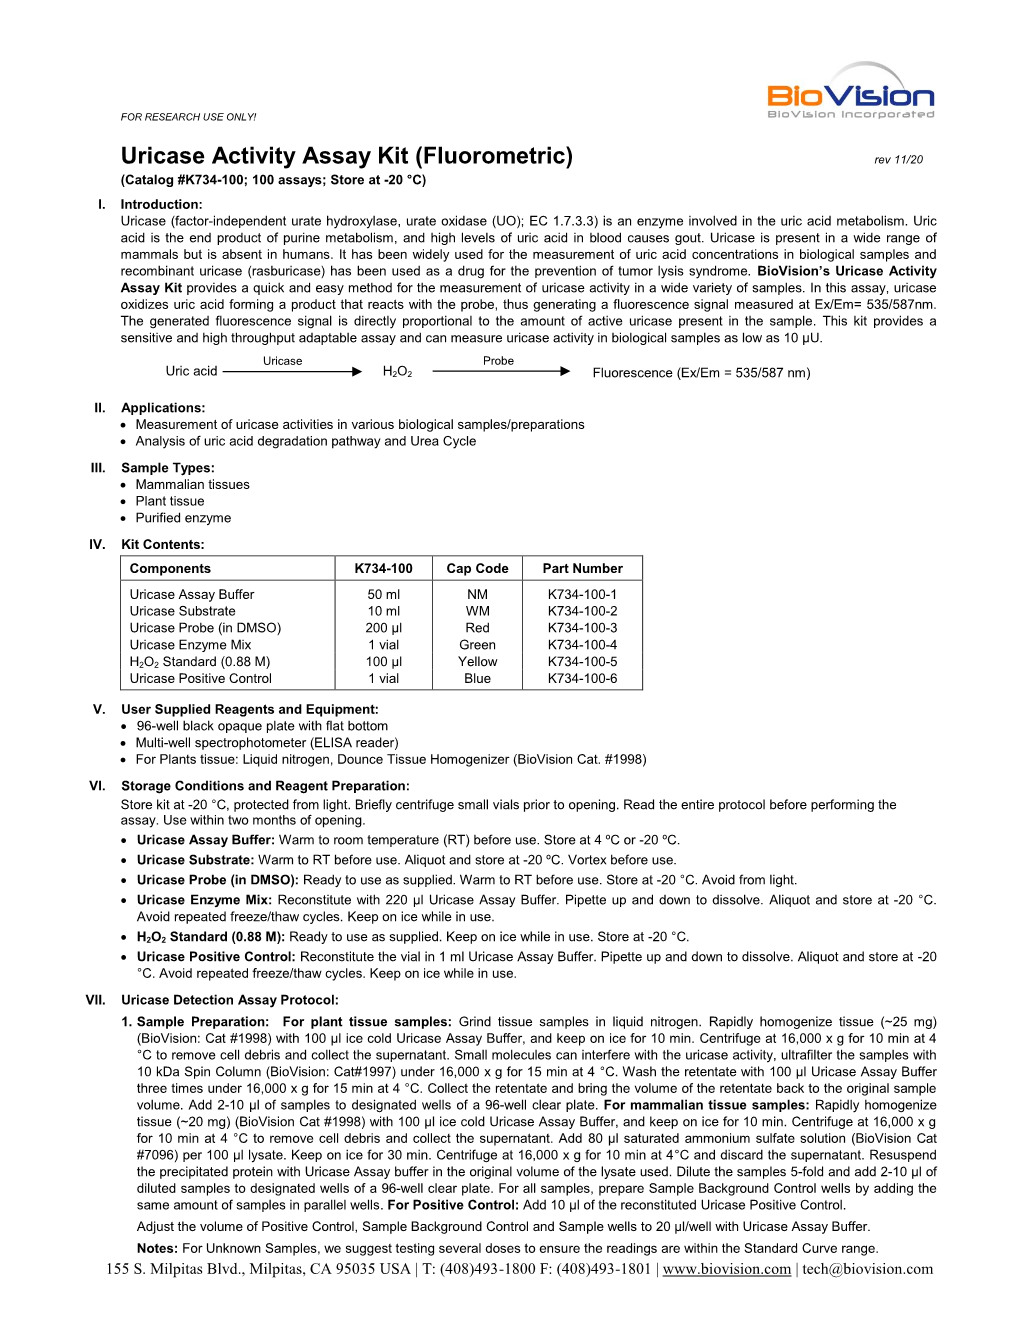 Uricase Activity Assay Kit (Fluorometric) Rev 11/20 (Catalog #K734-100; 100 Assays; Store at -20 °C) I